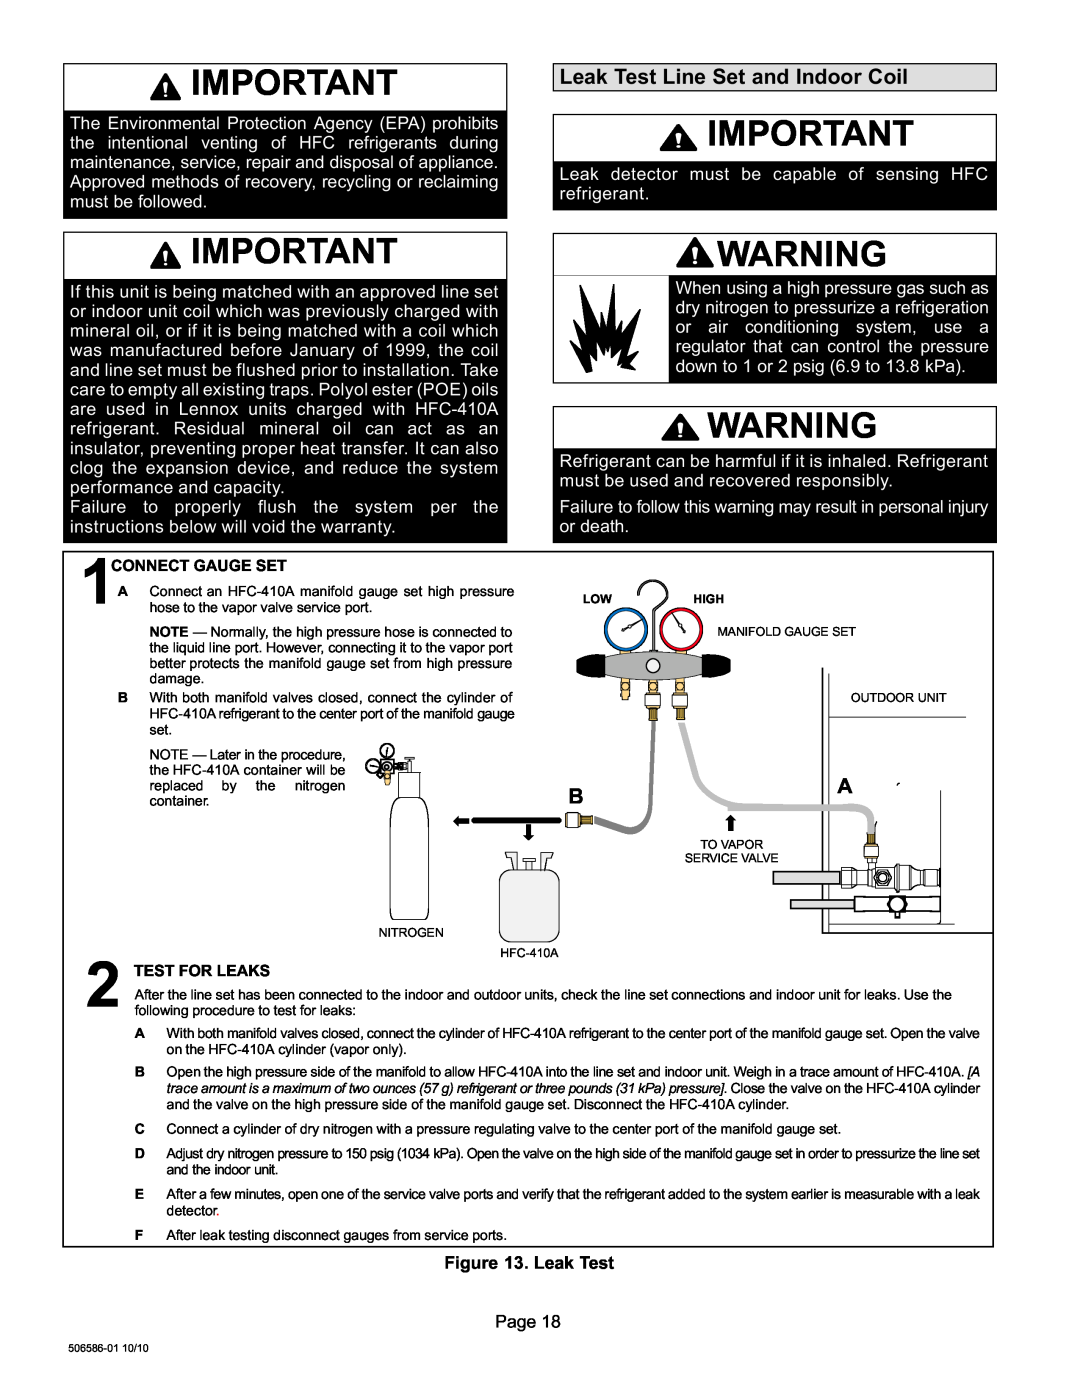 Lennox International Inc 506586-01 installation instructions Leak Test Line Set and Indoor Coil, Leak Test Page 